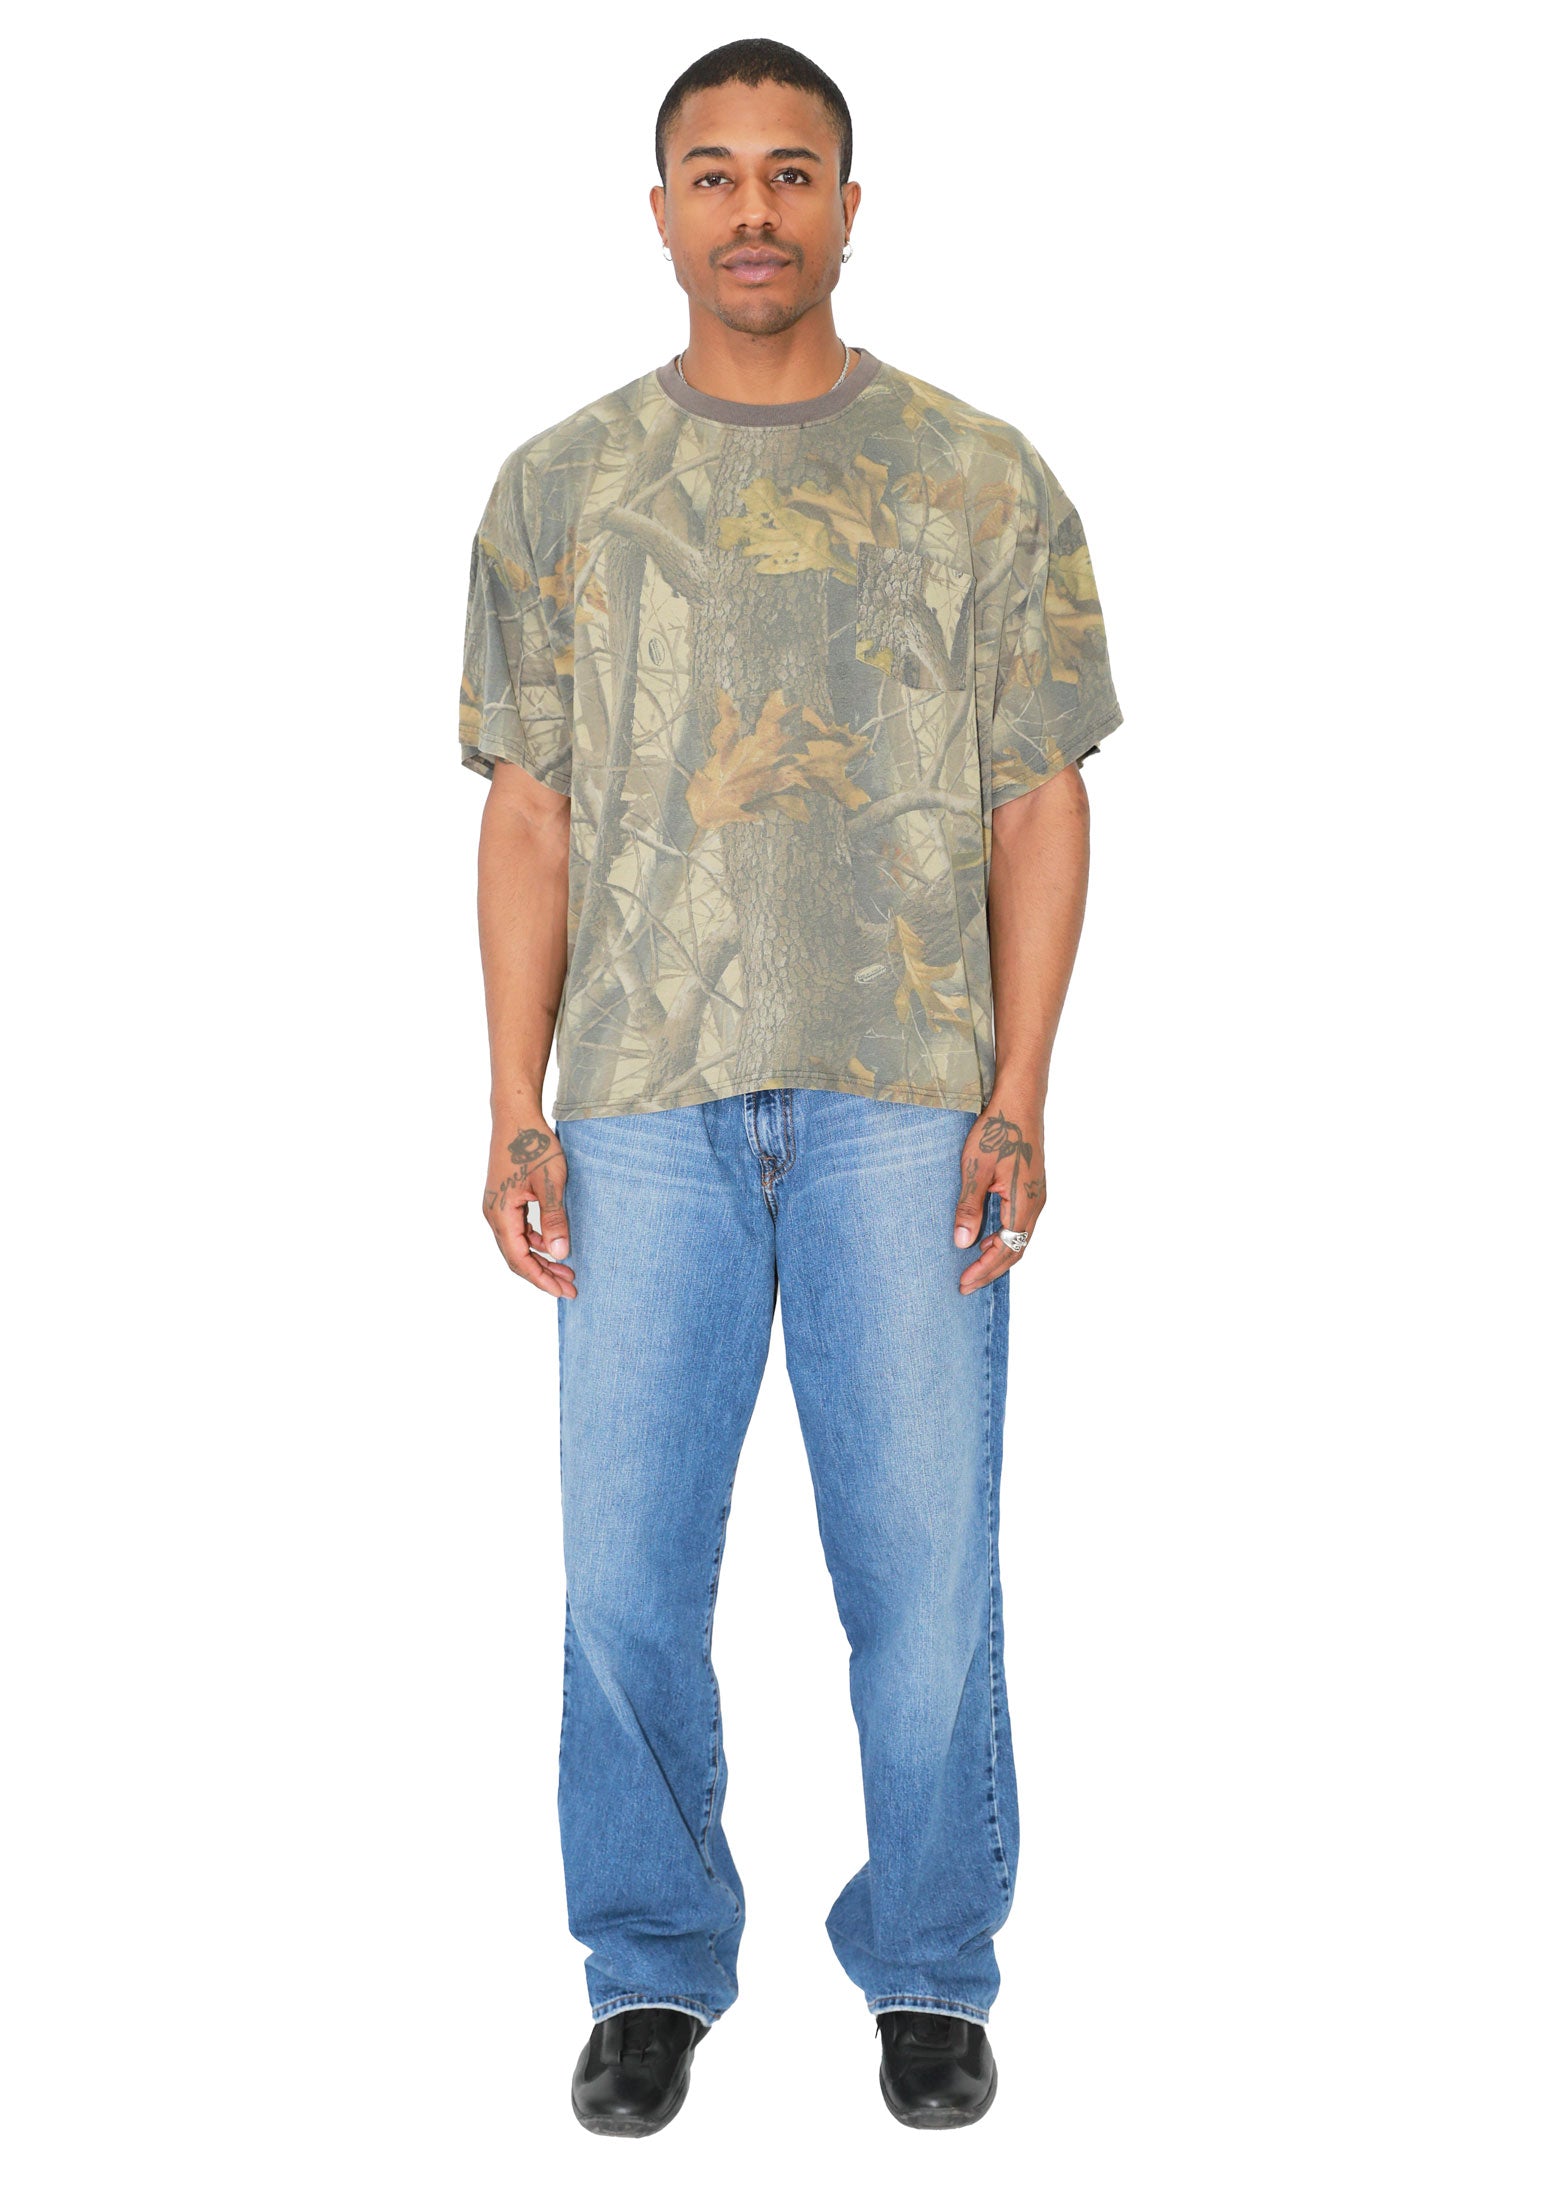 Camouflage T Shirt, Premium Quality Apparel